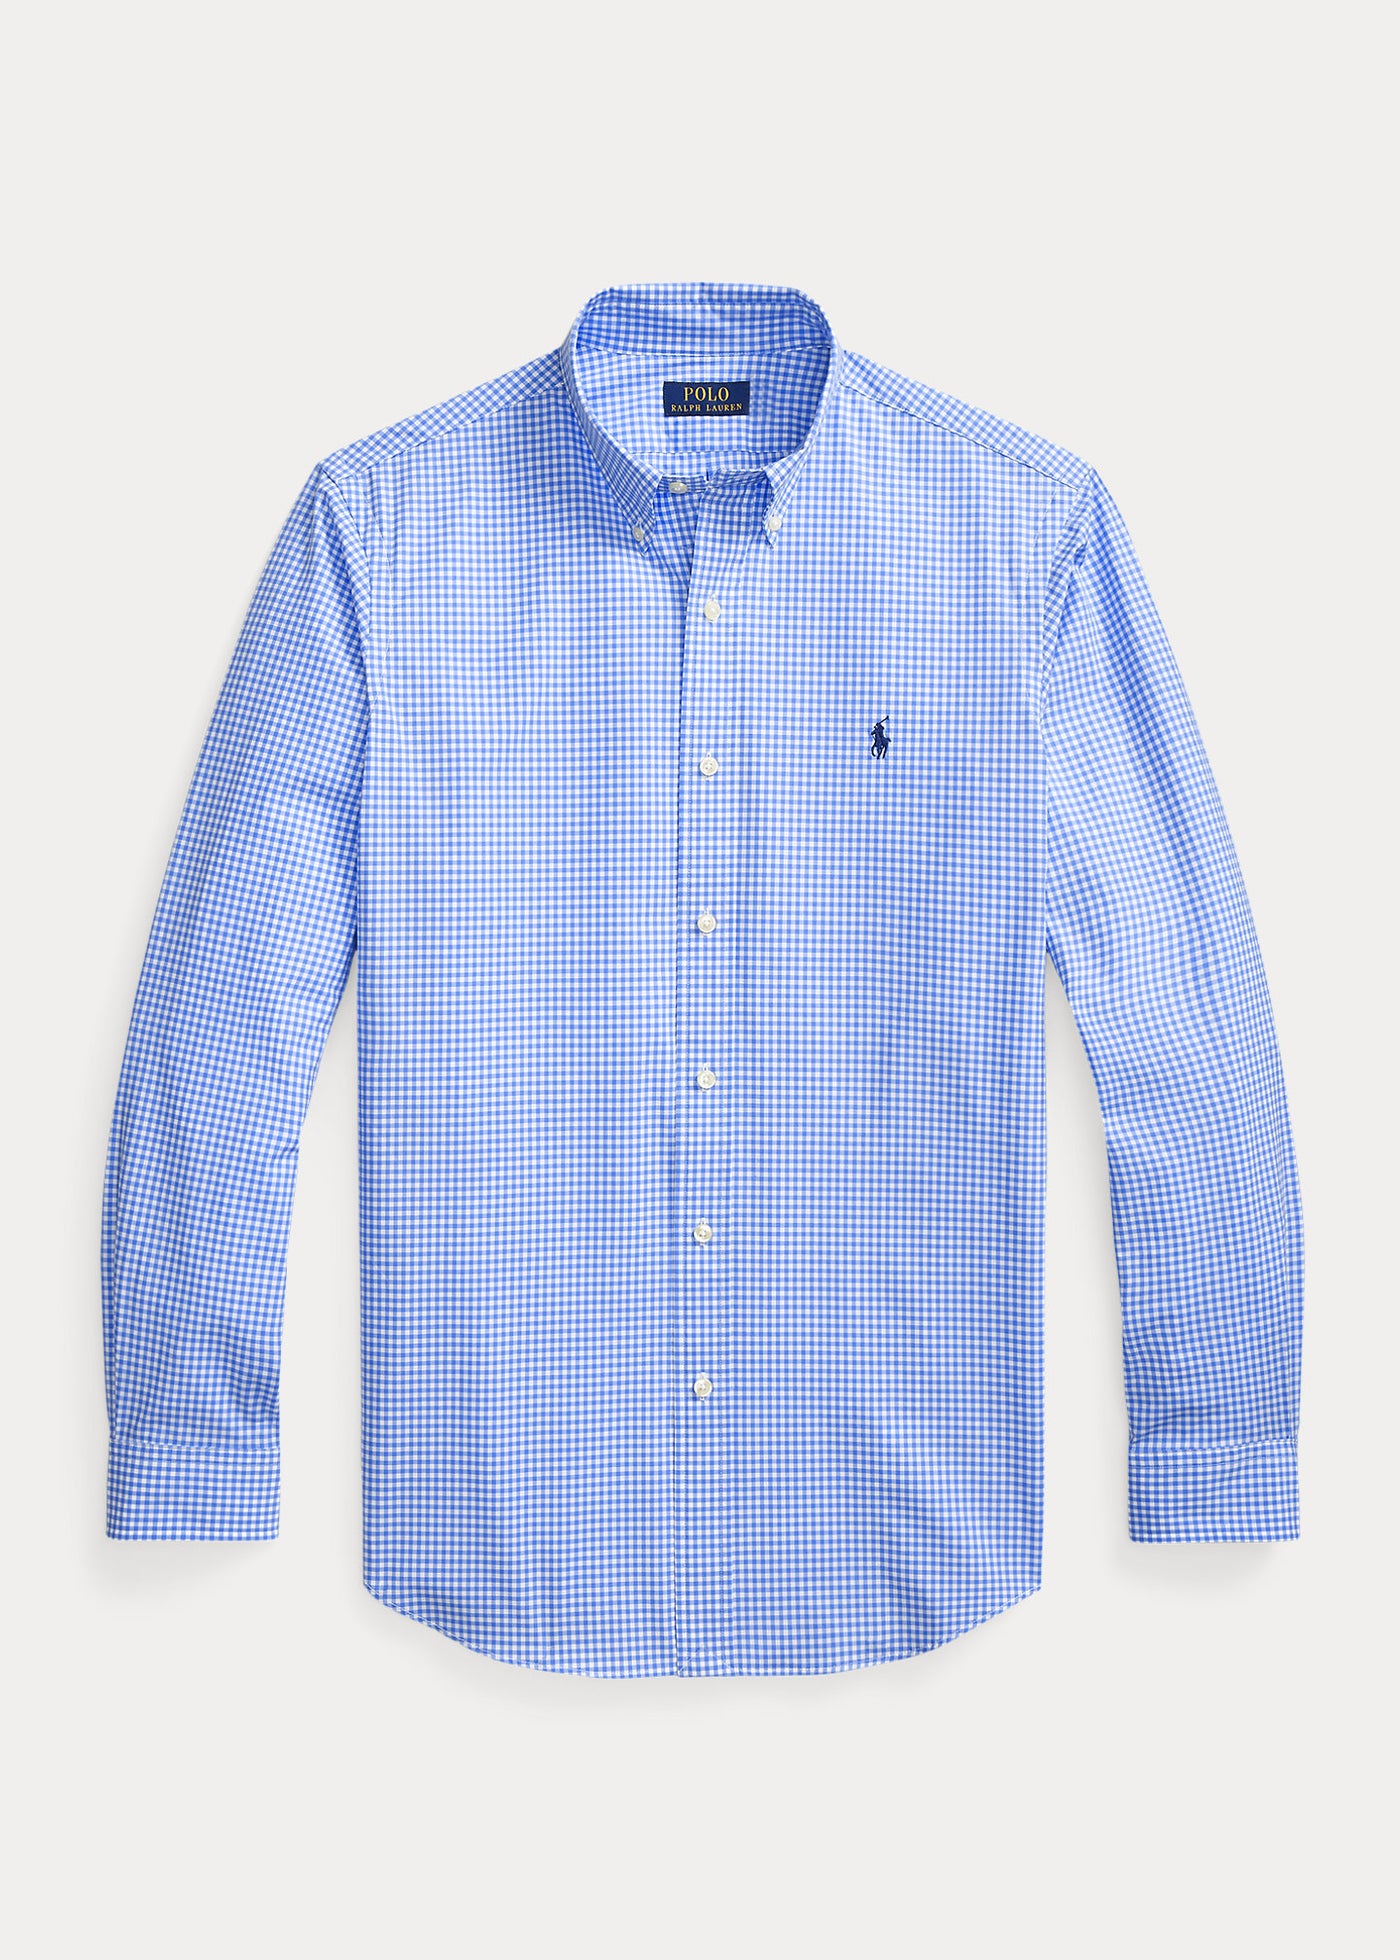 Ralph Lauren Custom Fit Plaid Stretch Poplin Shirt | Light Blue/White